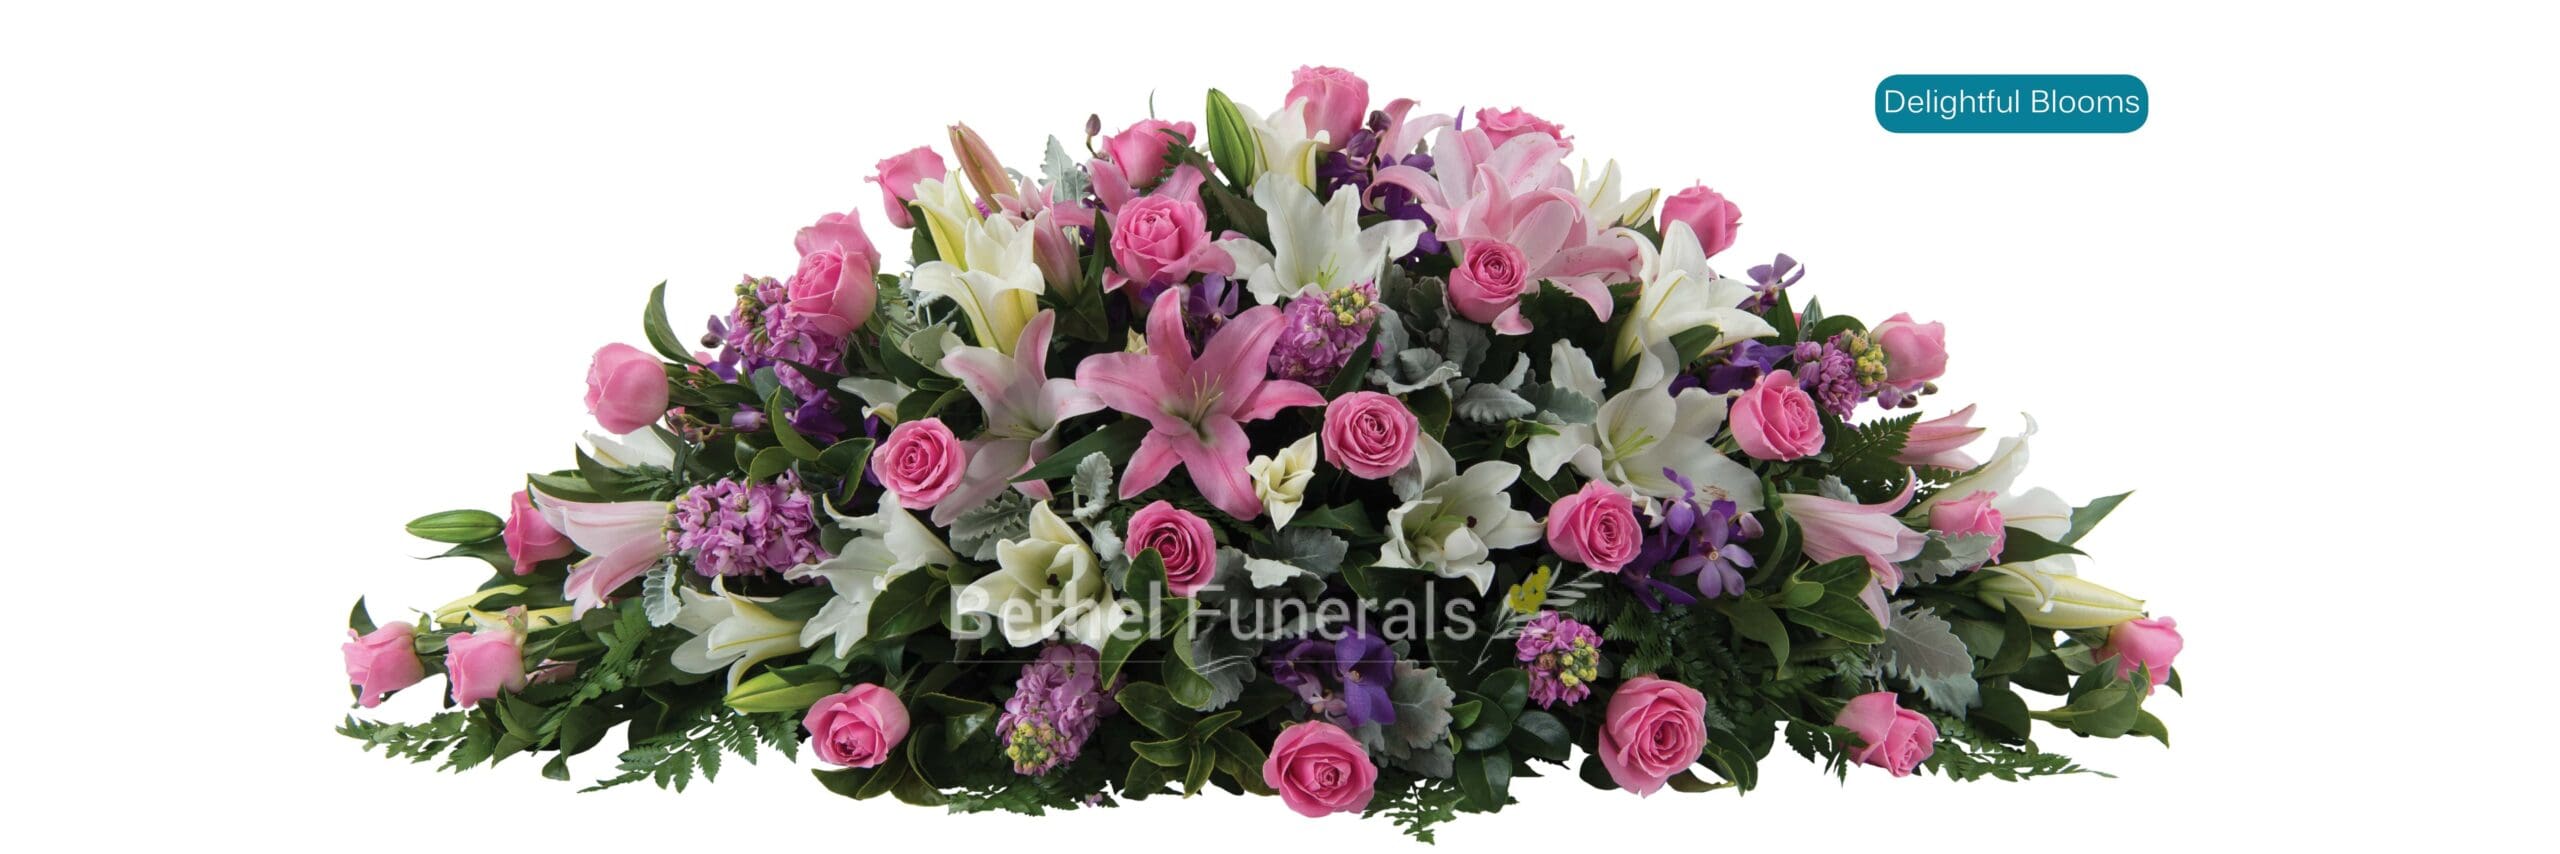 delightful blooms funeral flowers